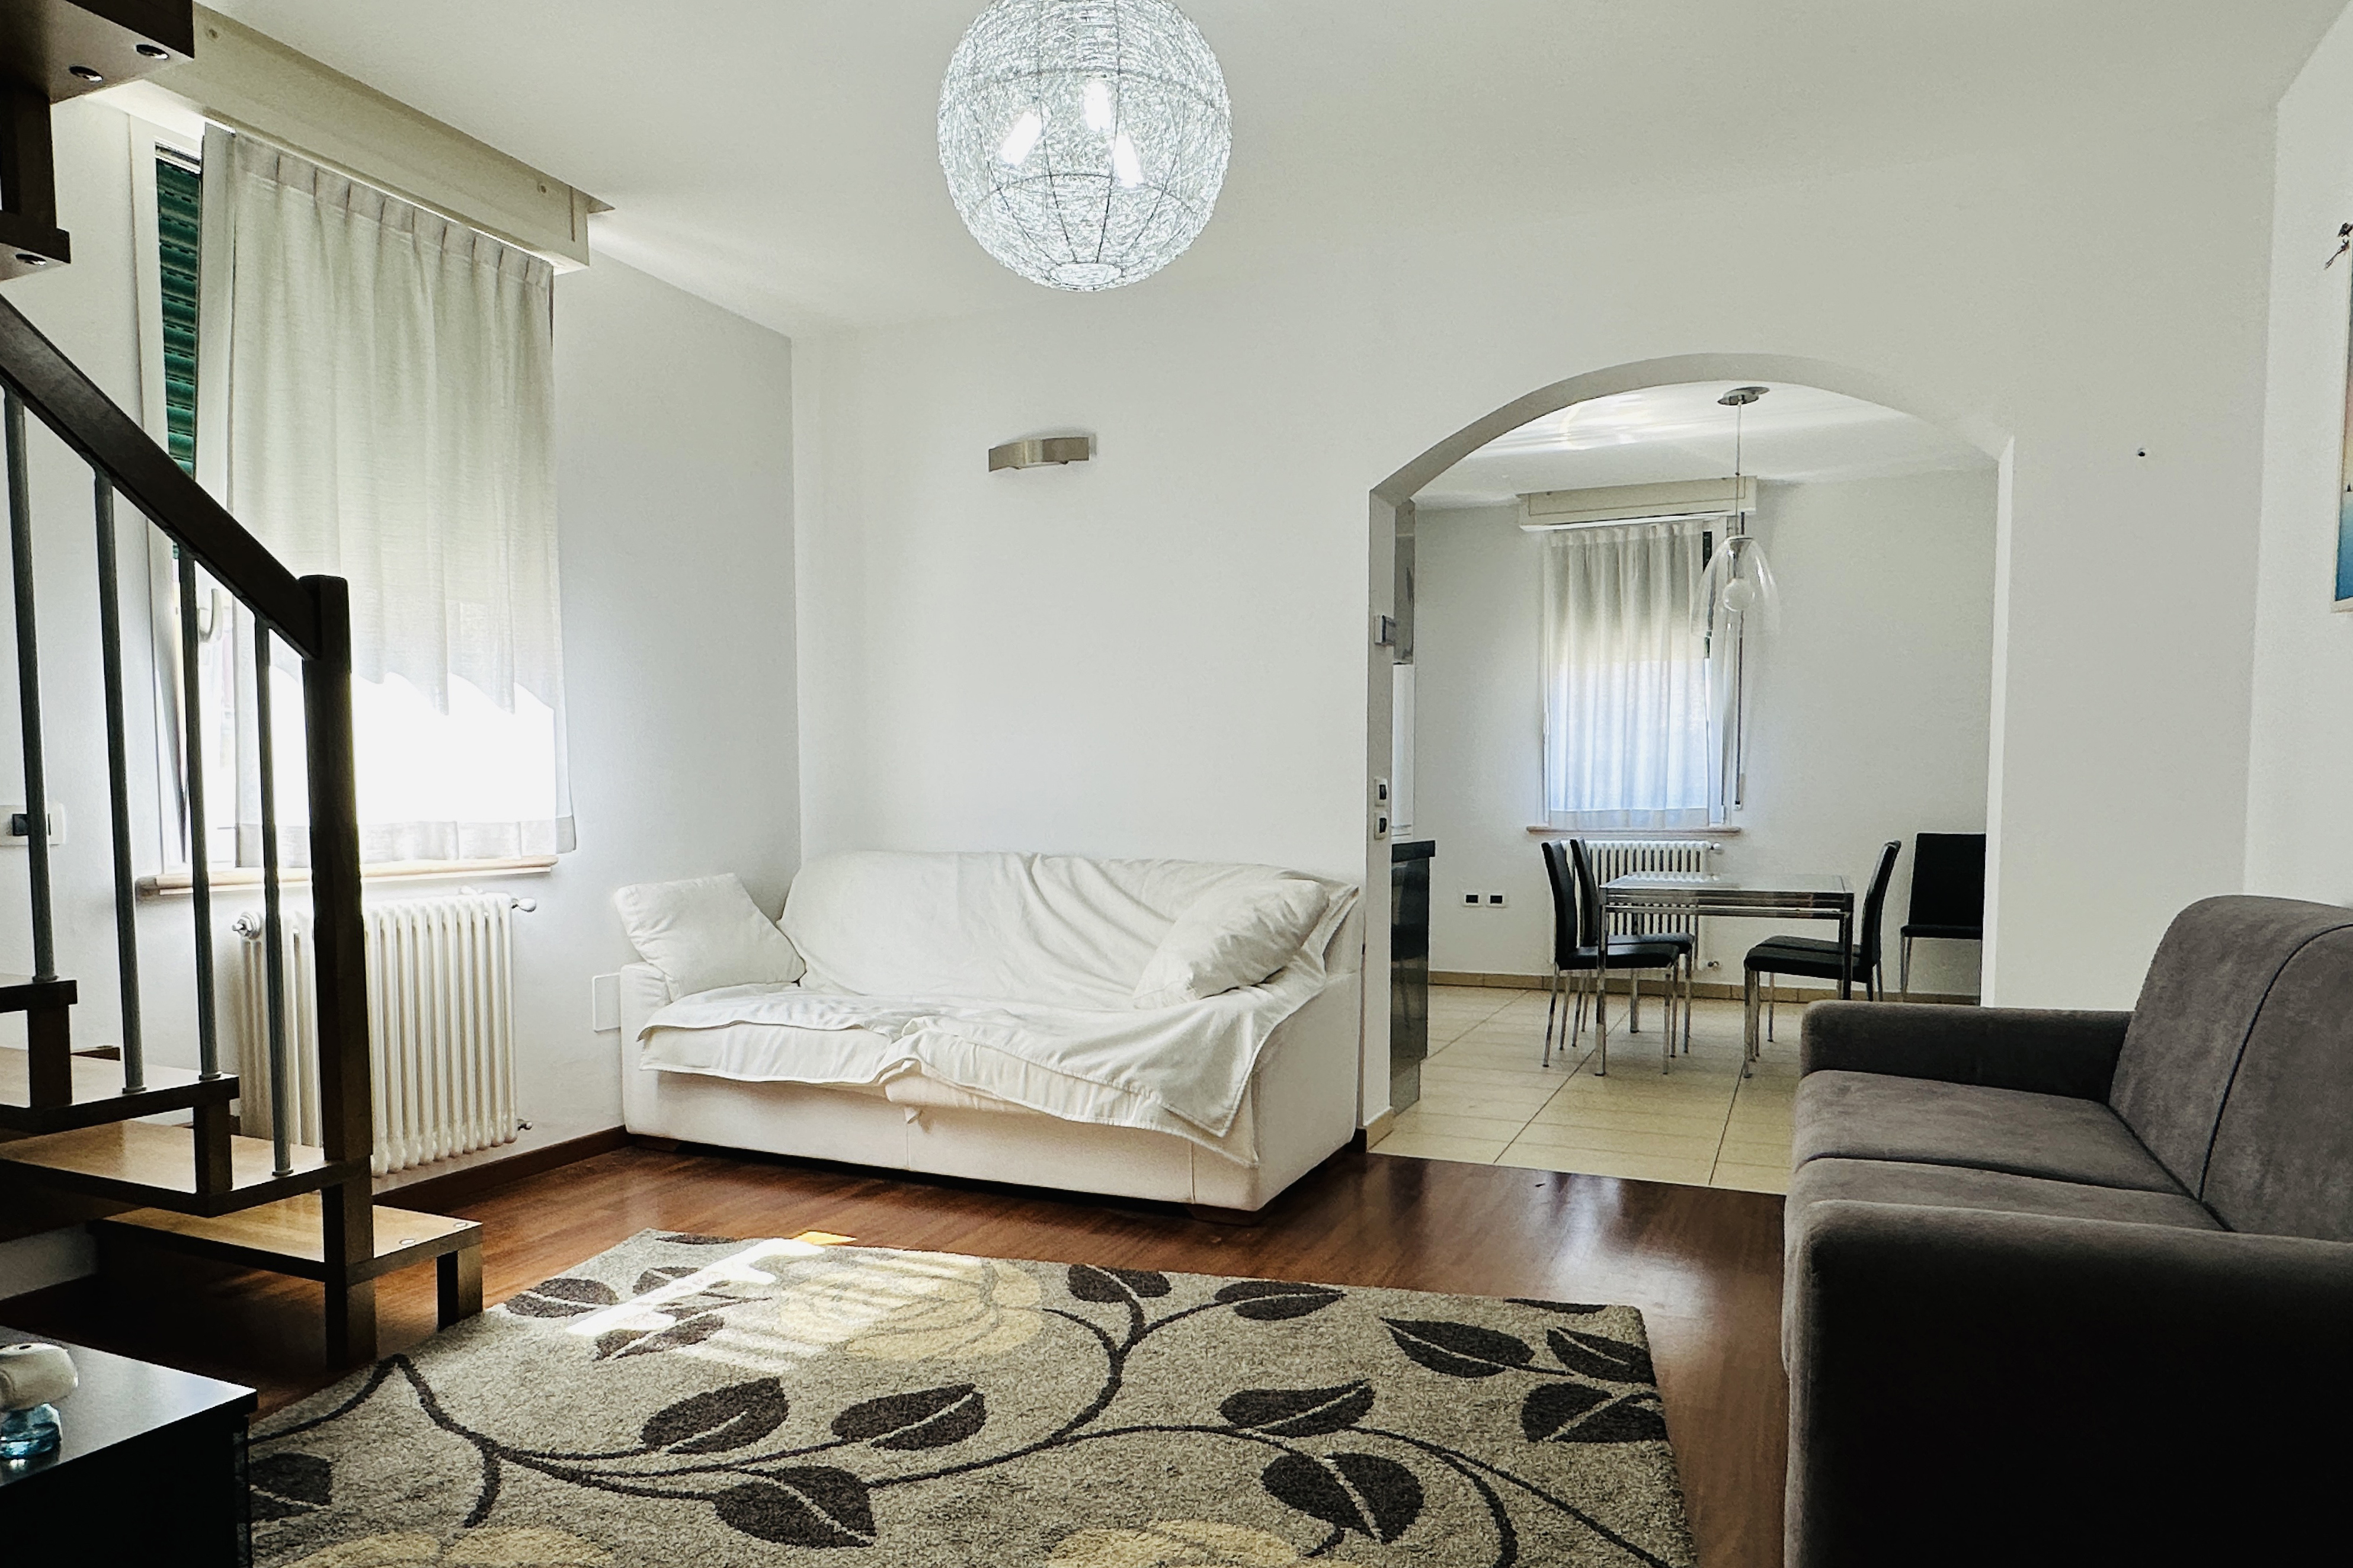 Vendita appartamento su due livelli con garage Pesaro - Zona mare (AP825)